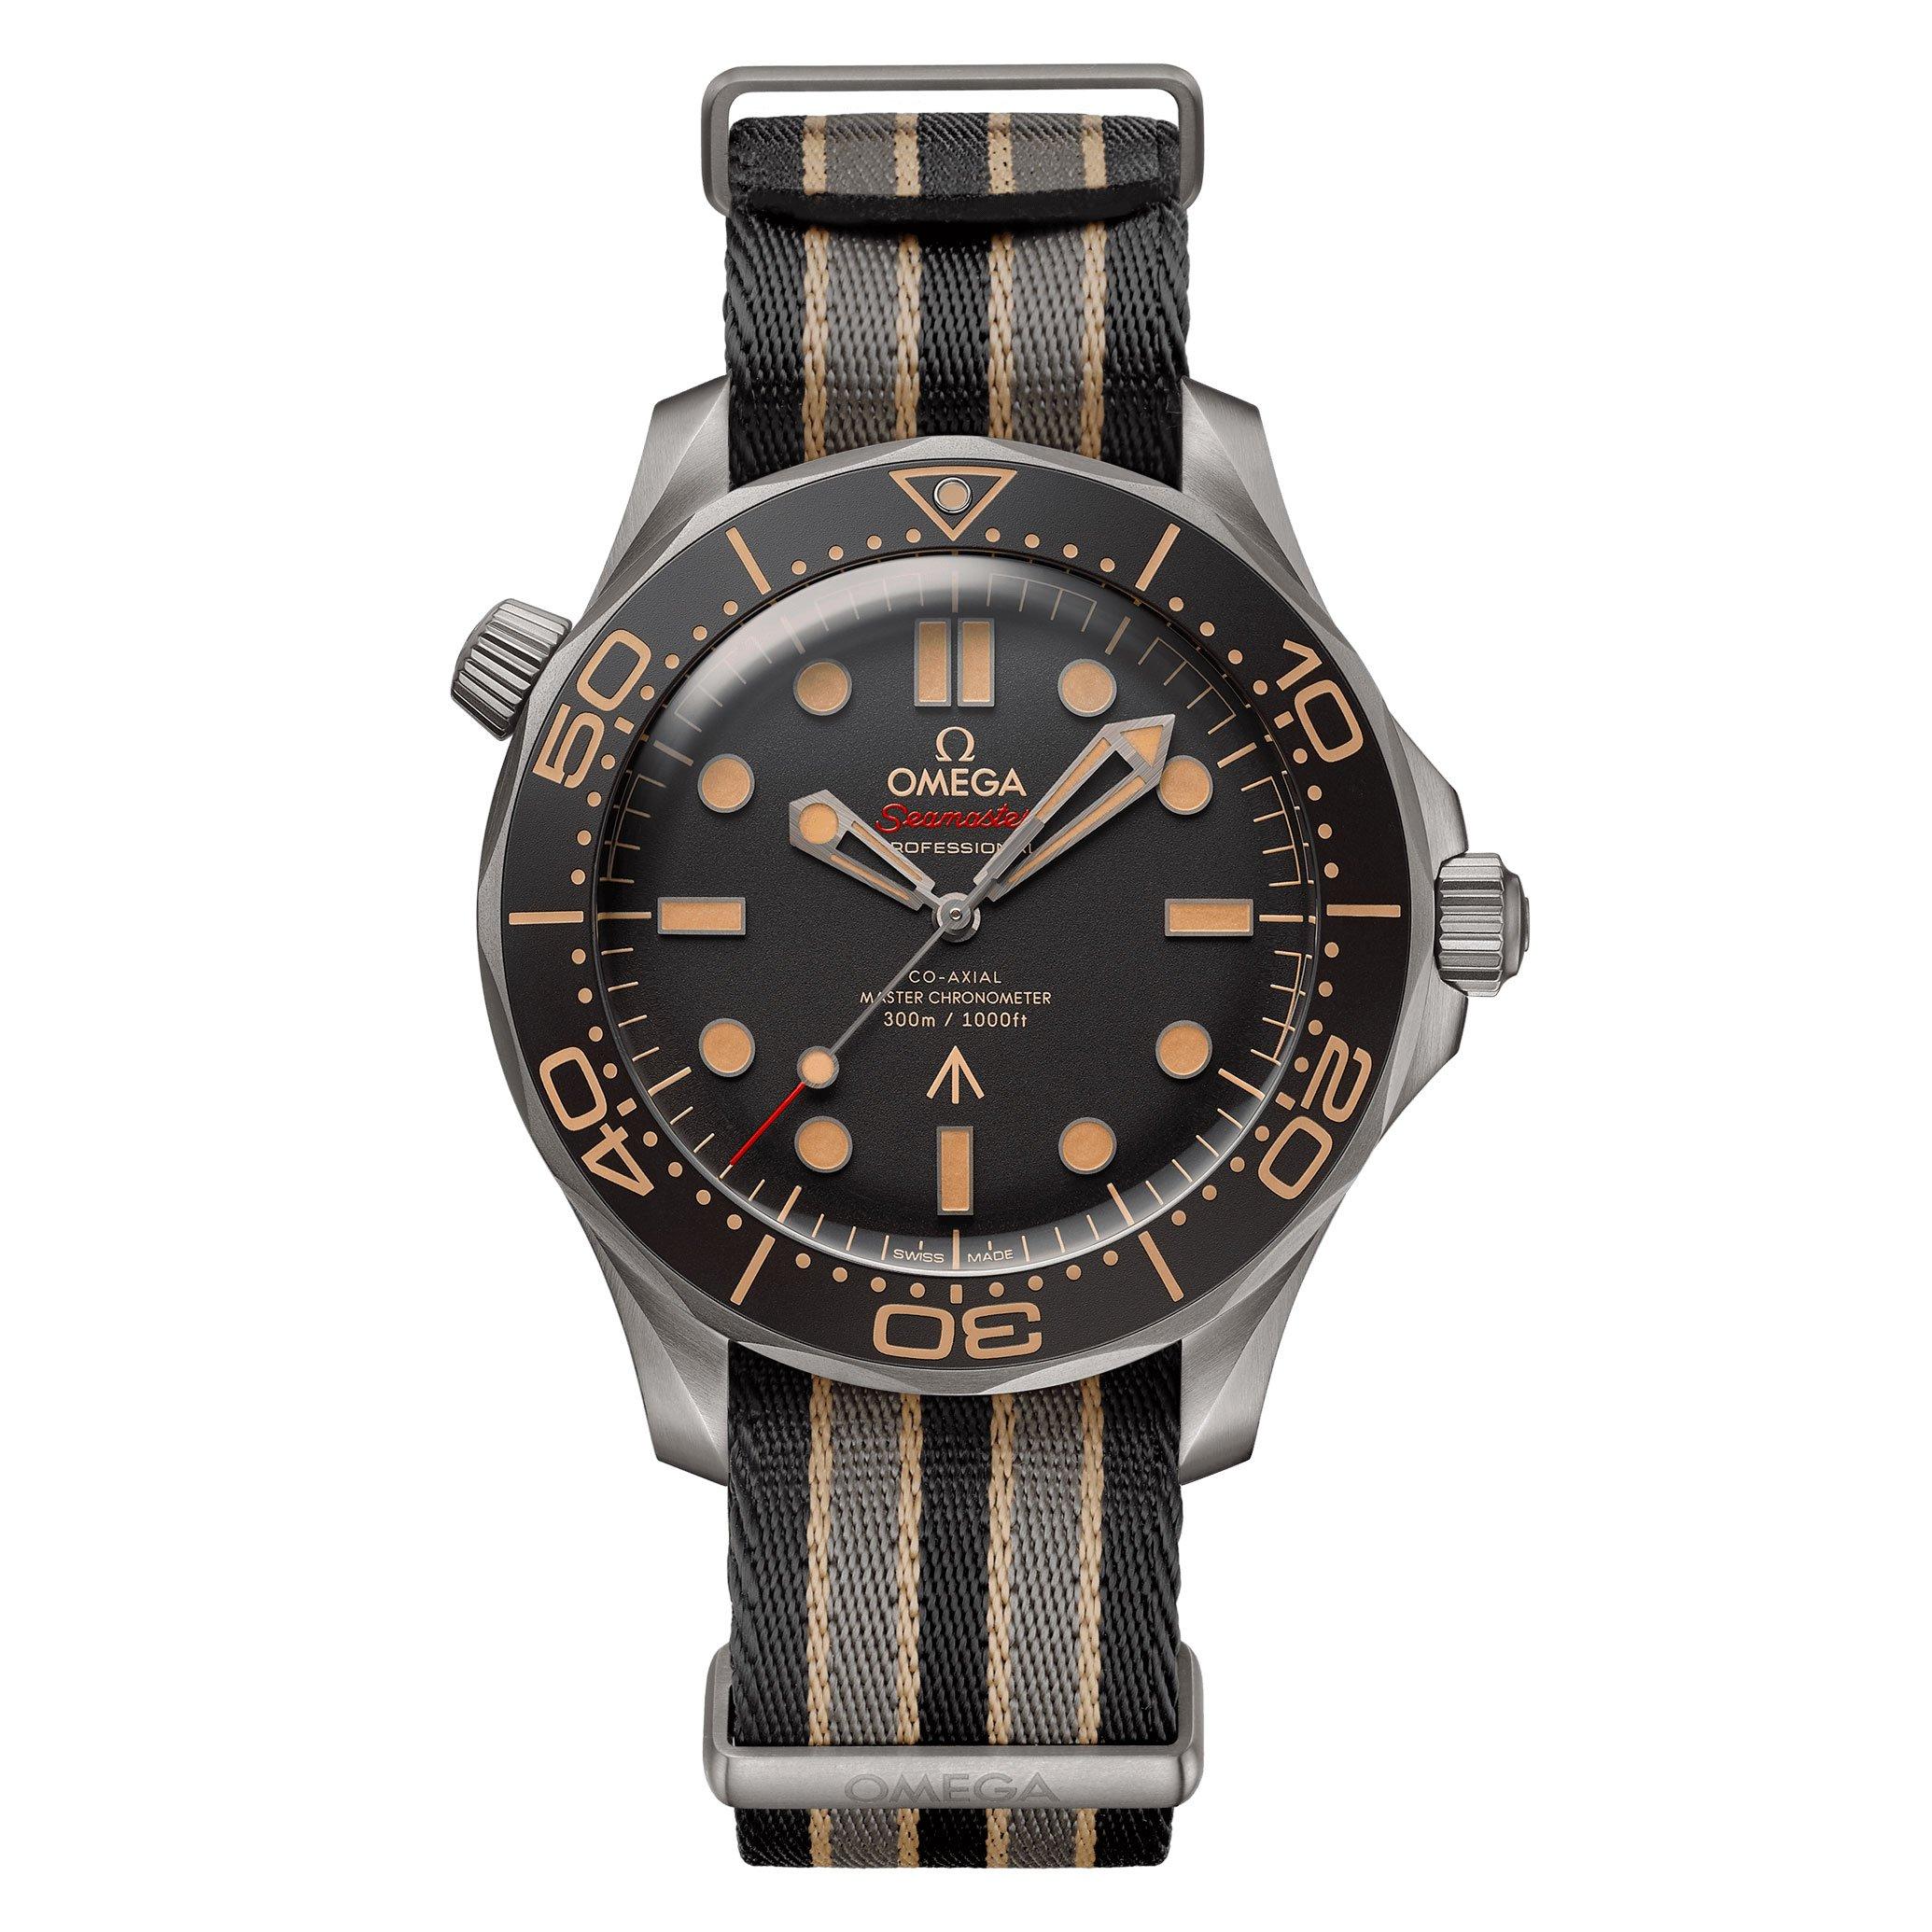 OMEGA Seamaster Diver 300m James Bond 007 Titanium Automatic Men's